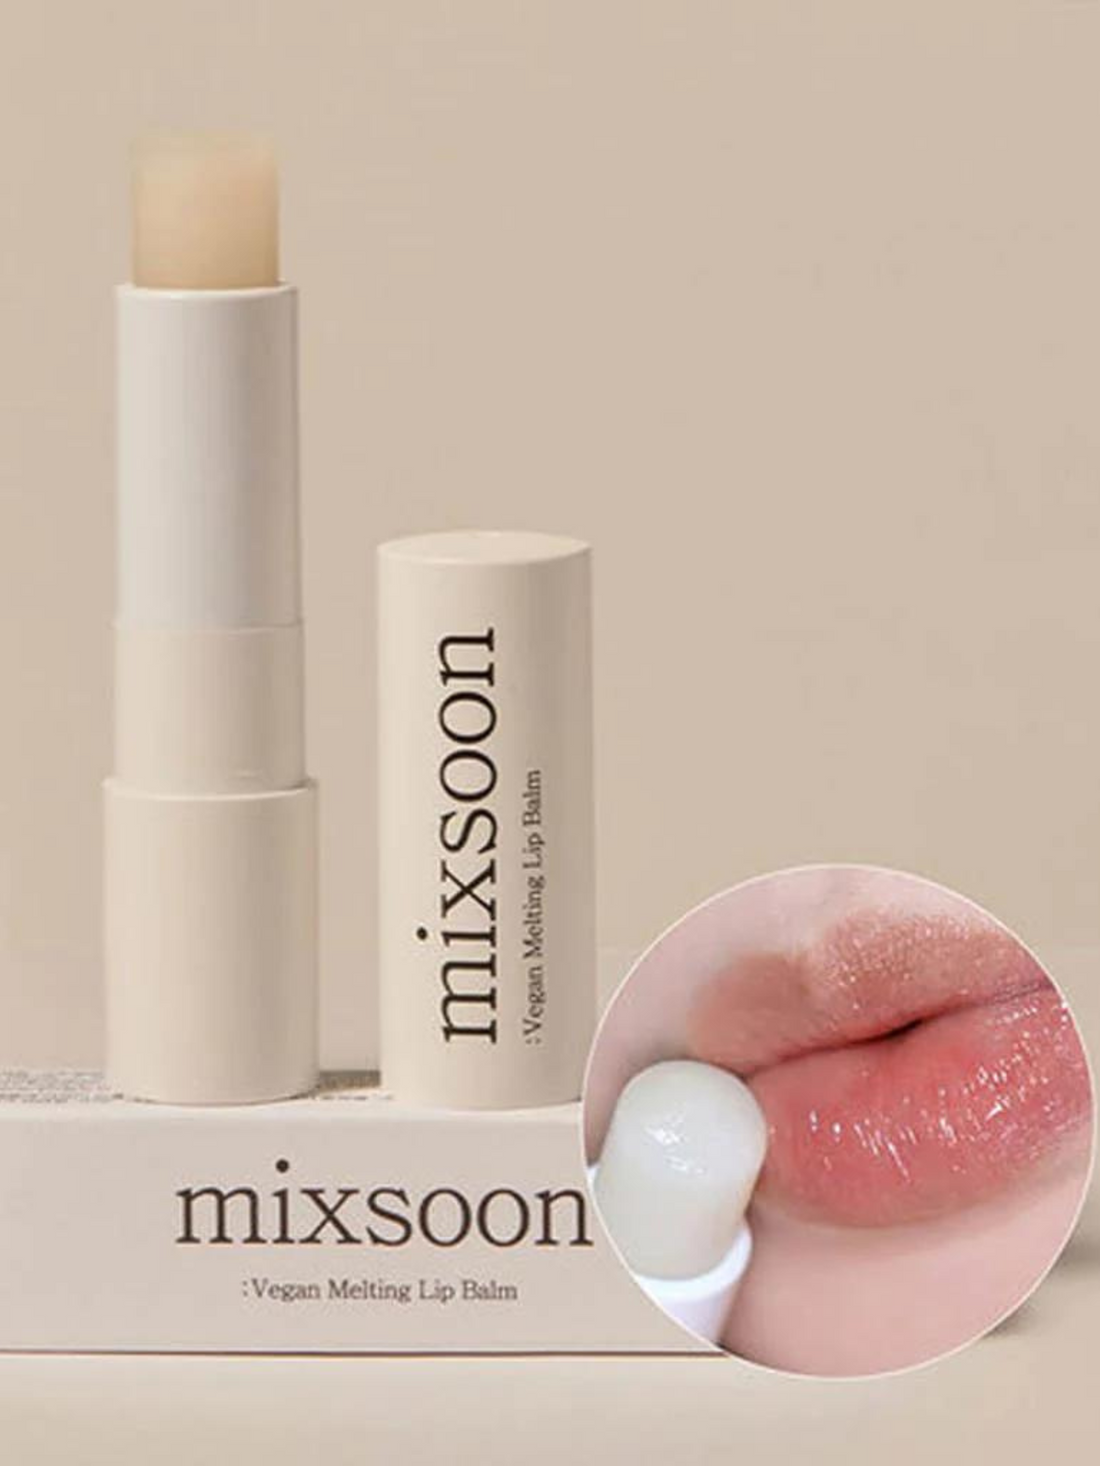 Mixsoon - Lip balm - Vegan Melting Lip Balm 01. Clear